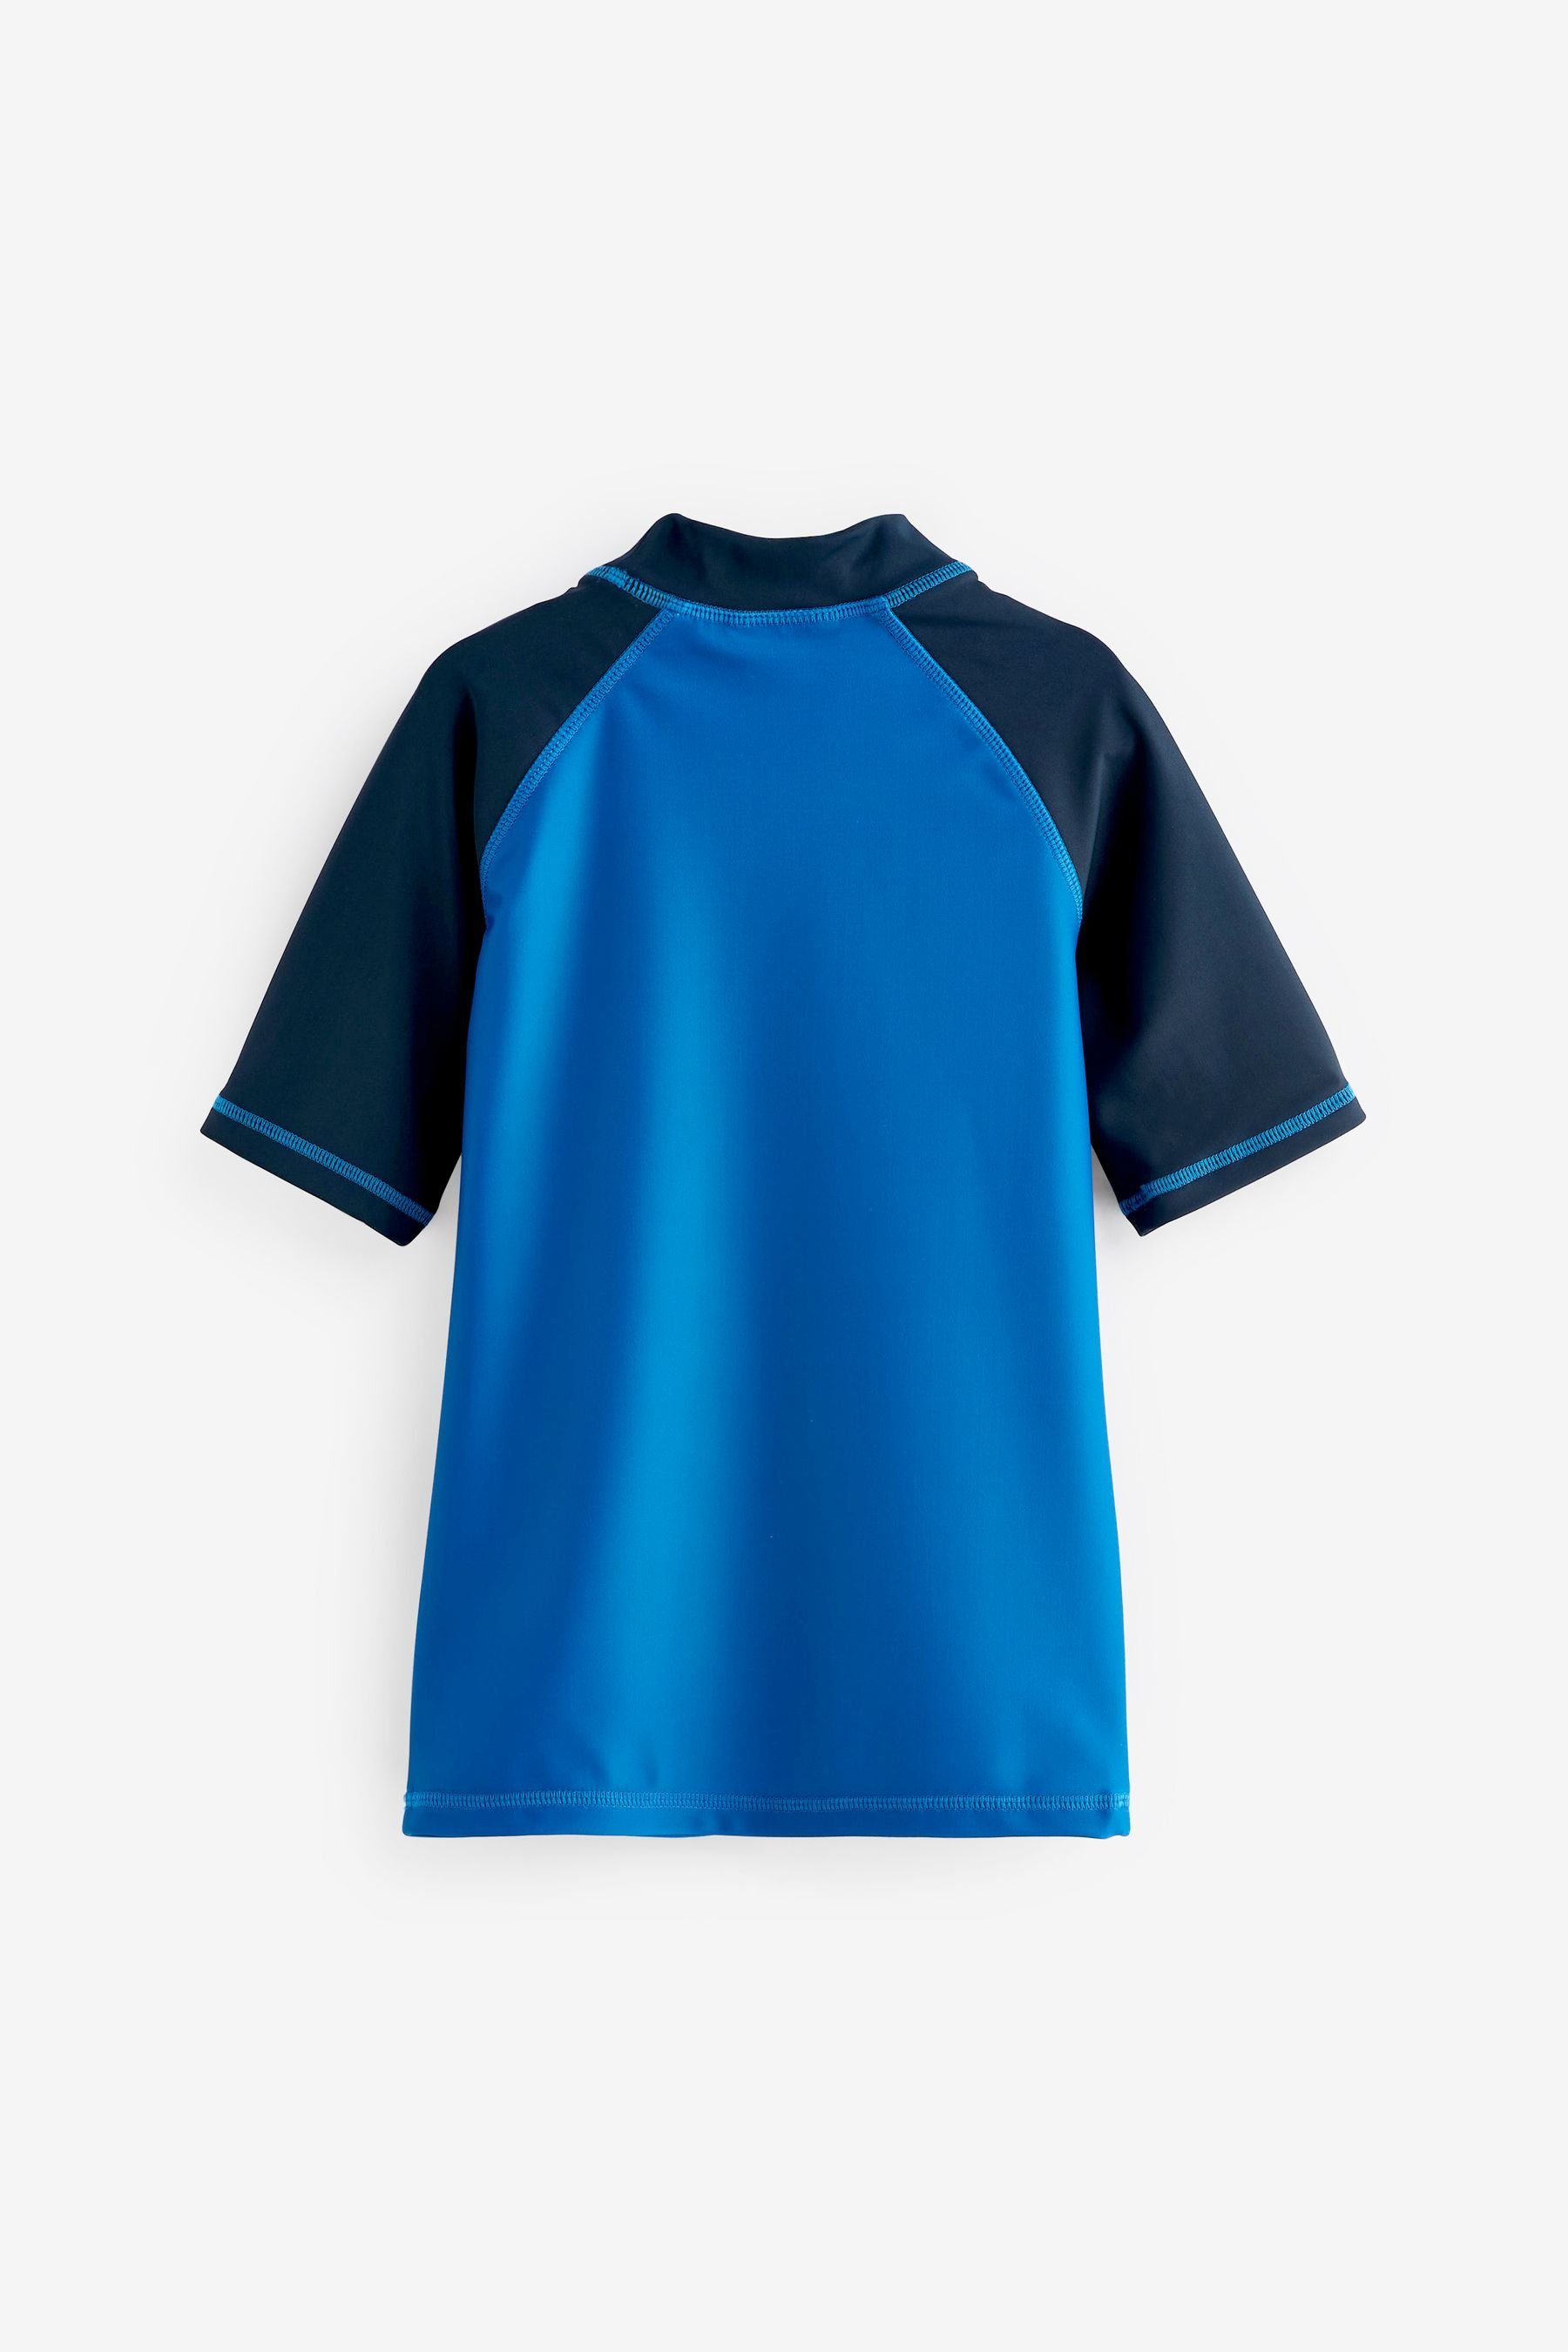 Next Guard Blue Rashie-Shirt Rash Lizenziertes (1-tlg) Sonic